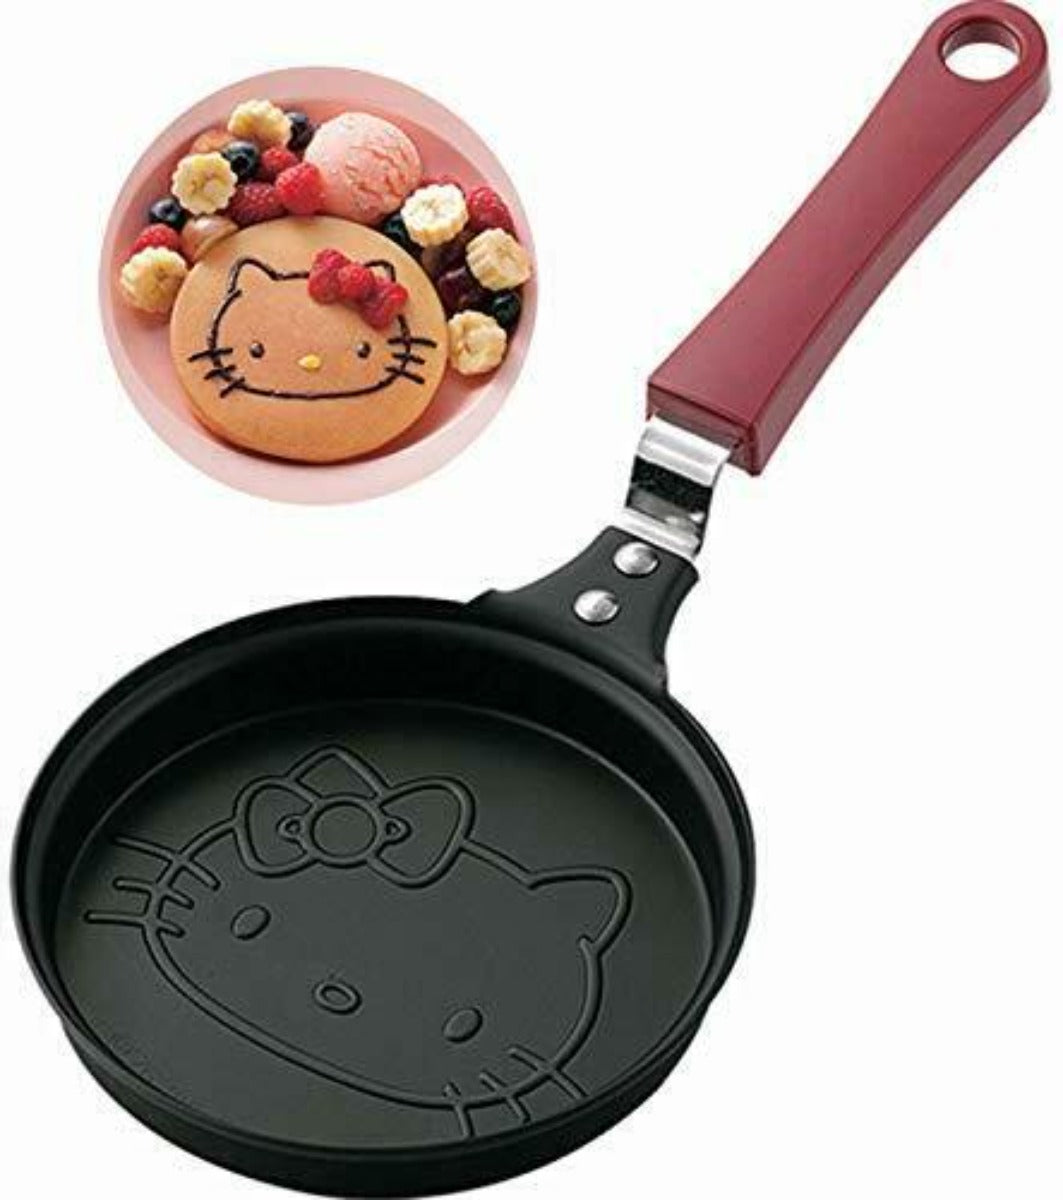 Hotcake Pan - Sanrio Hello Kitty 12cm